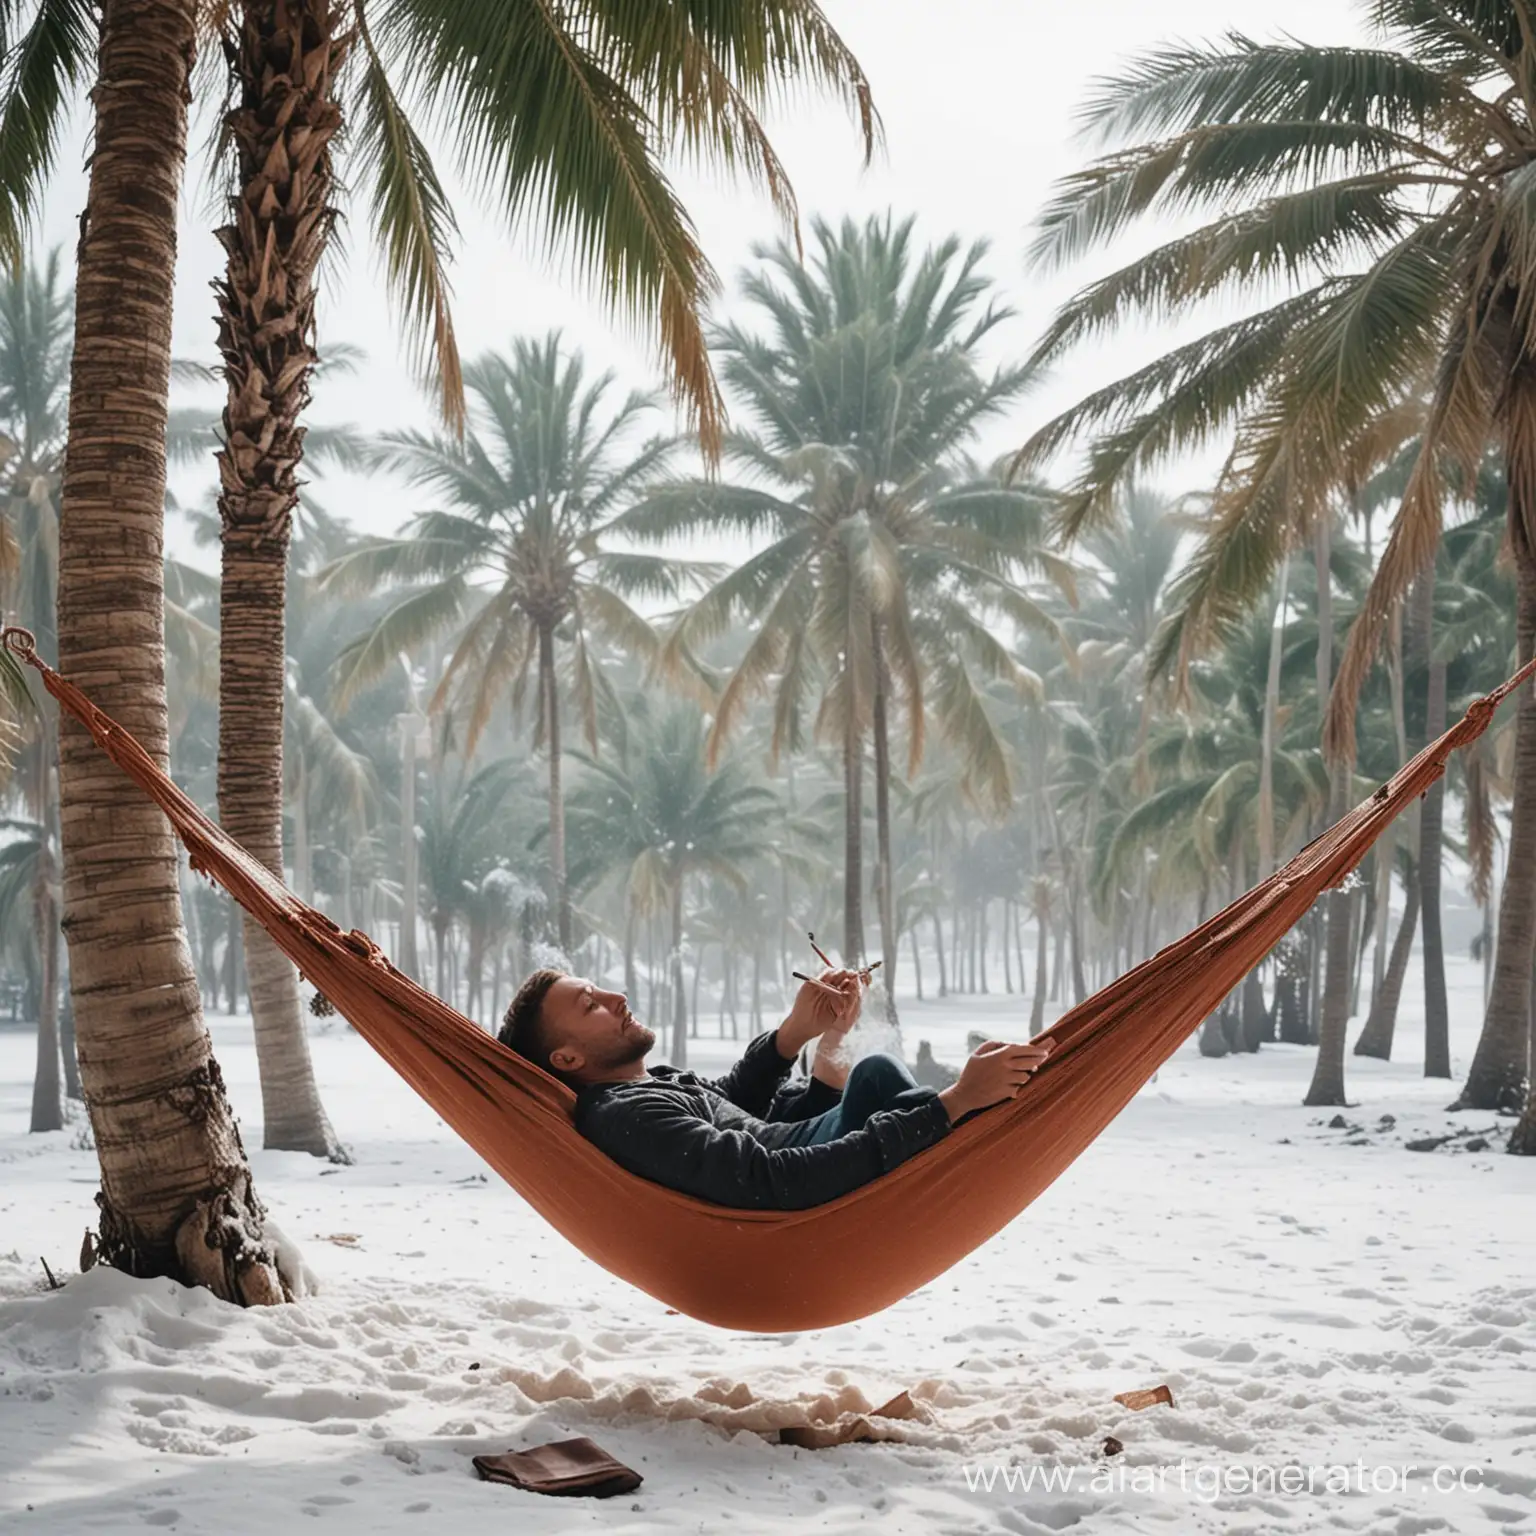 Relaxing-in-Contrast-Man-Smoking-in-Hammock-Under-Snowy-Palm-Trees